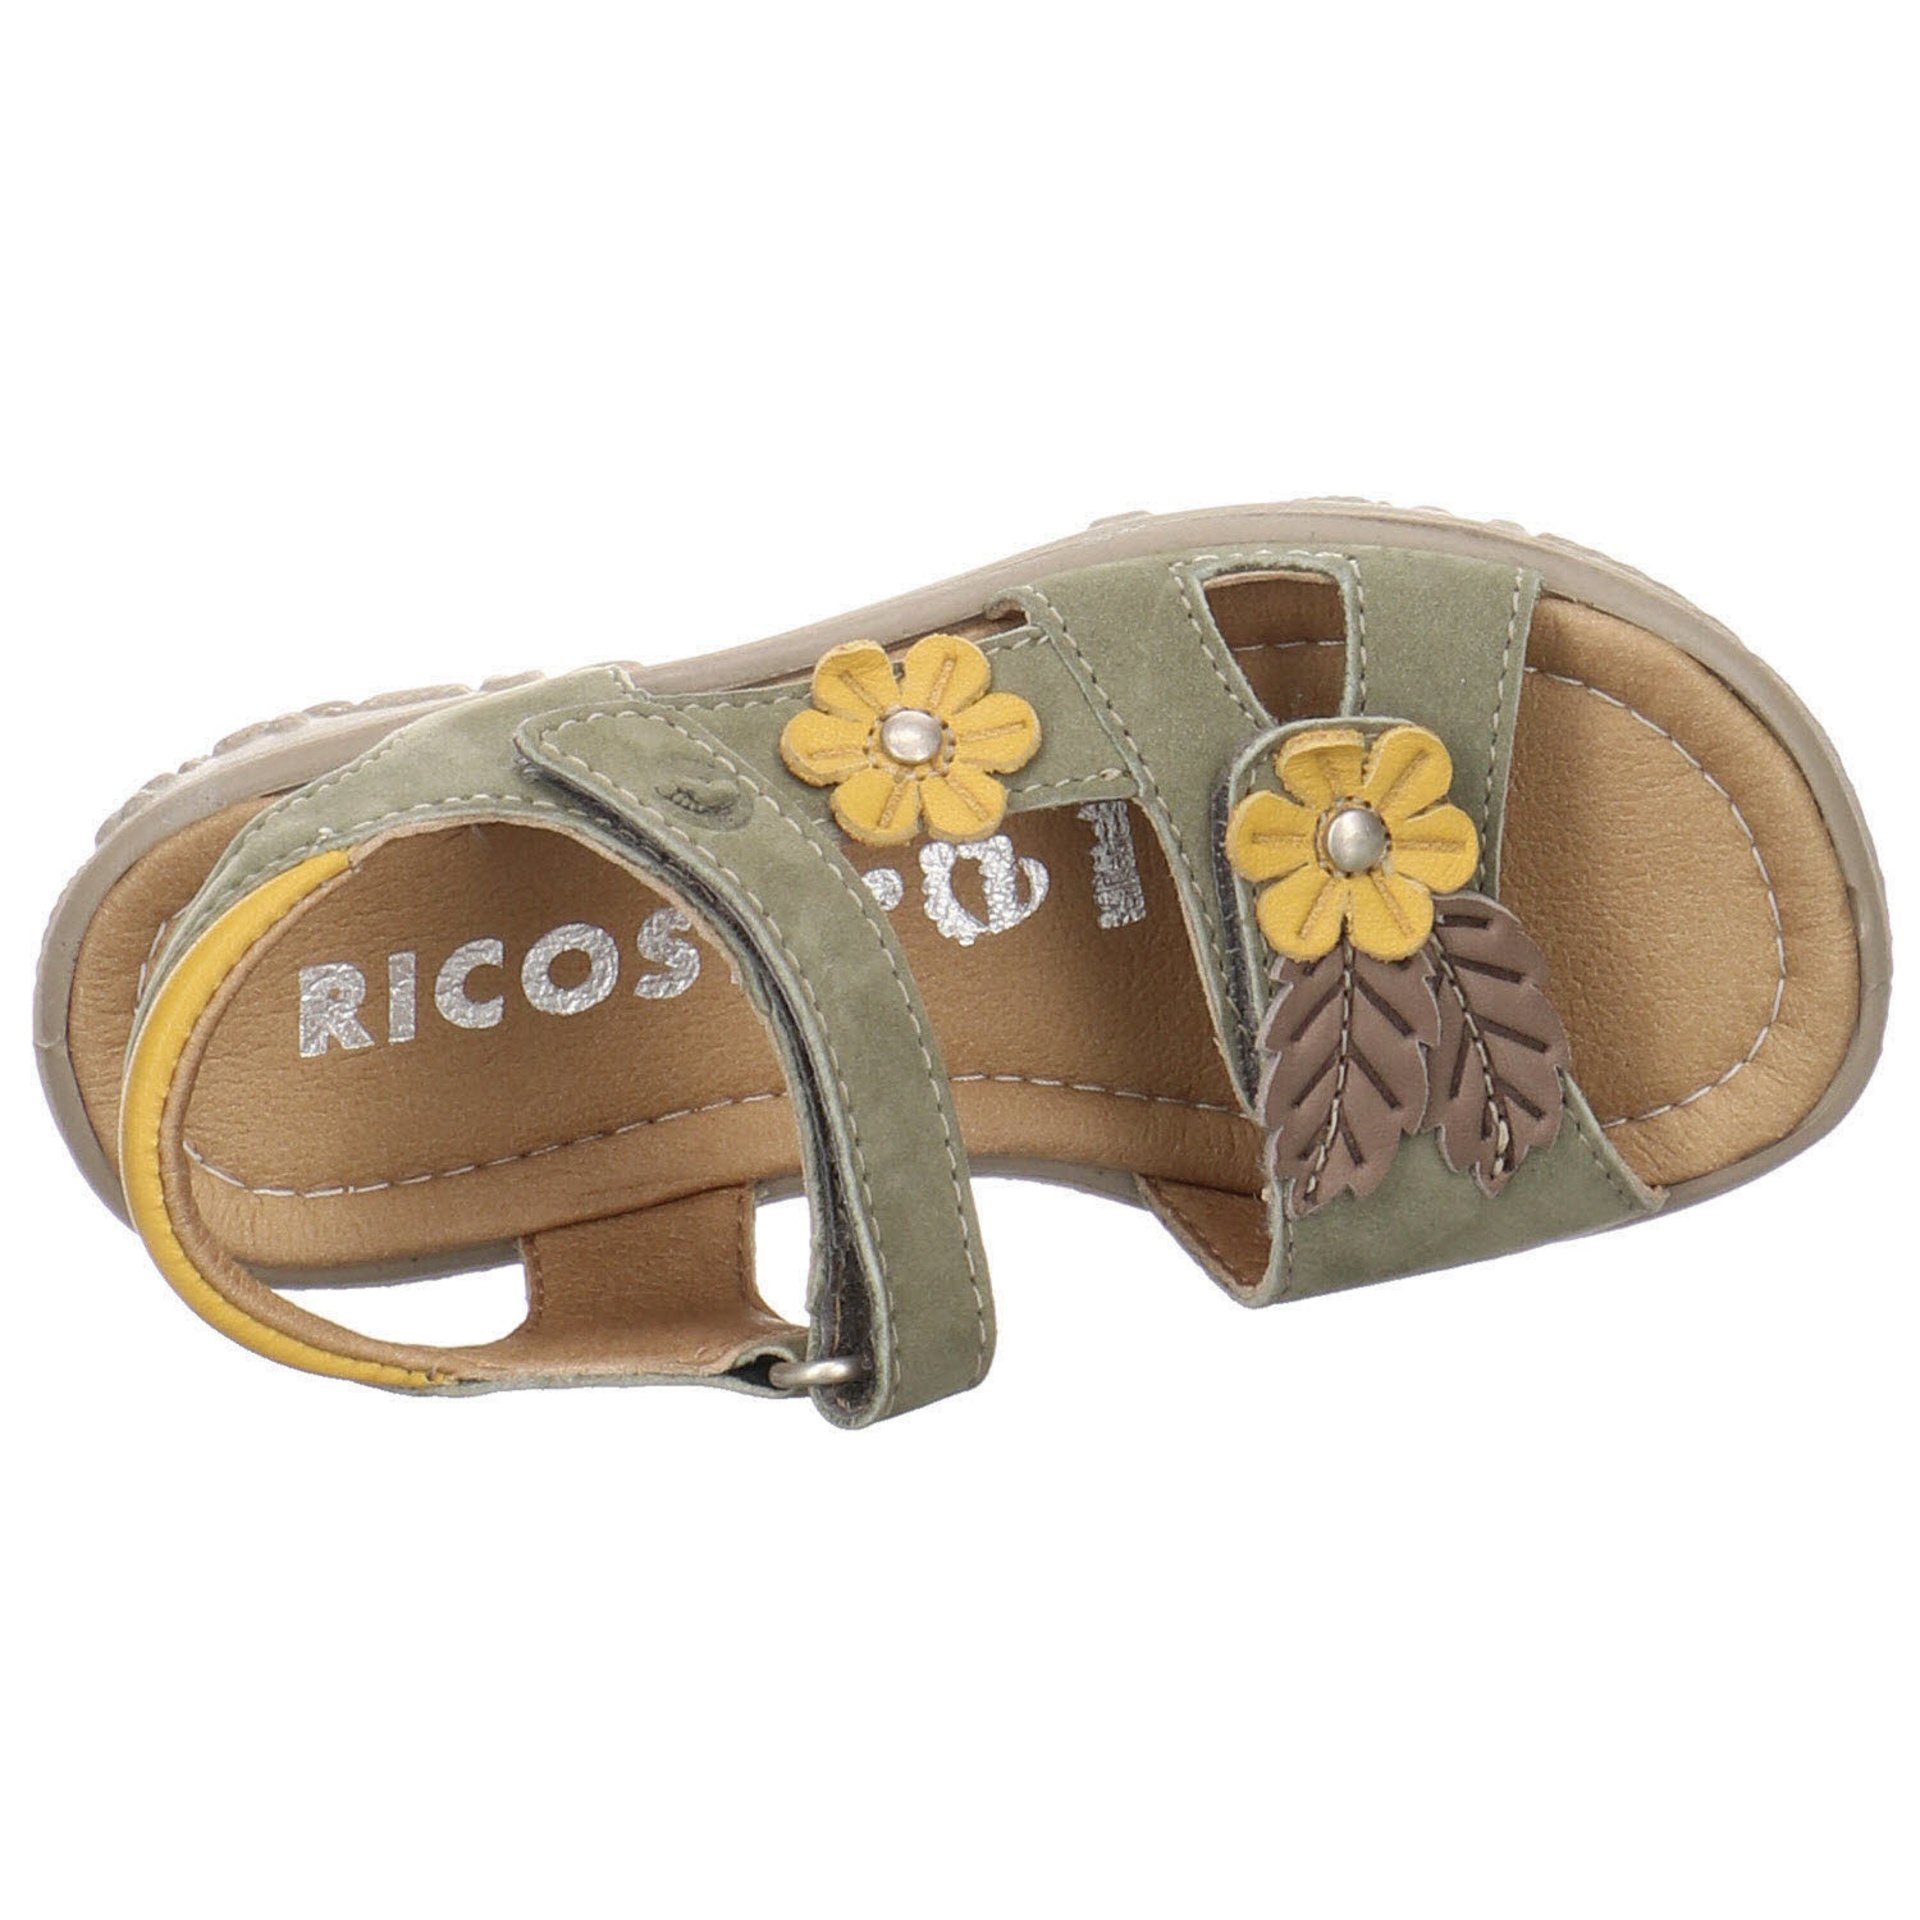 Mädchen Sandalen Ricosta eukalyptus Nubukleder Schuhe Sandale Kinderschuhe Cilla Sandale